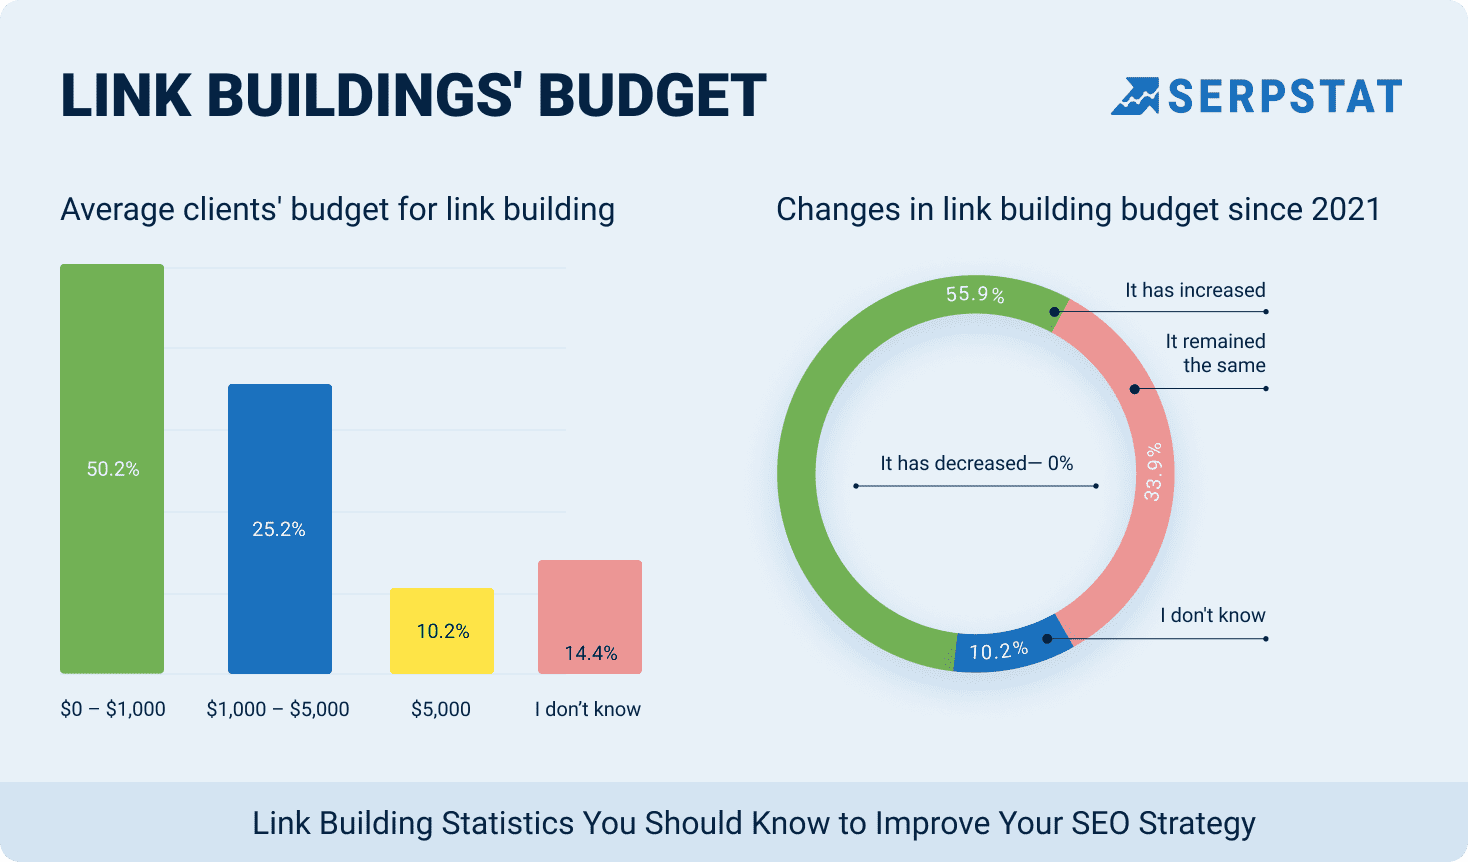  Link buildings' budget 